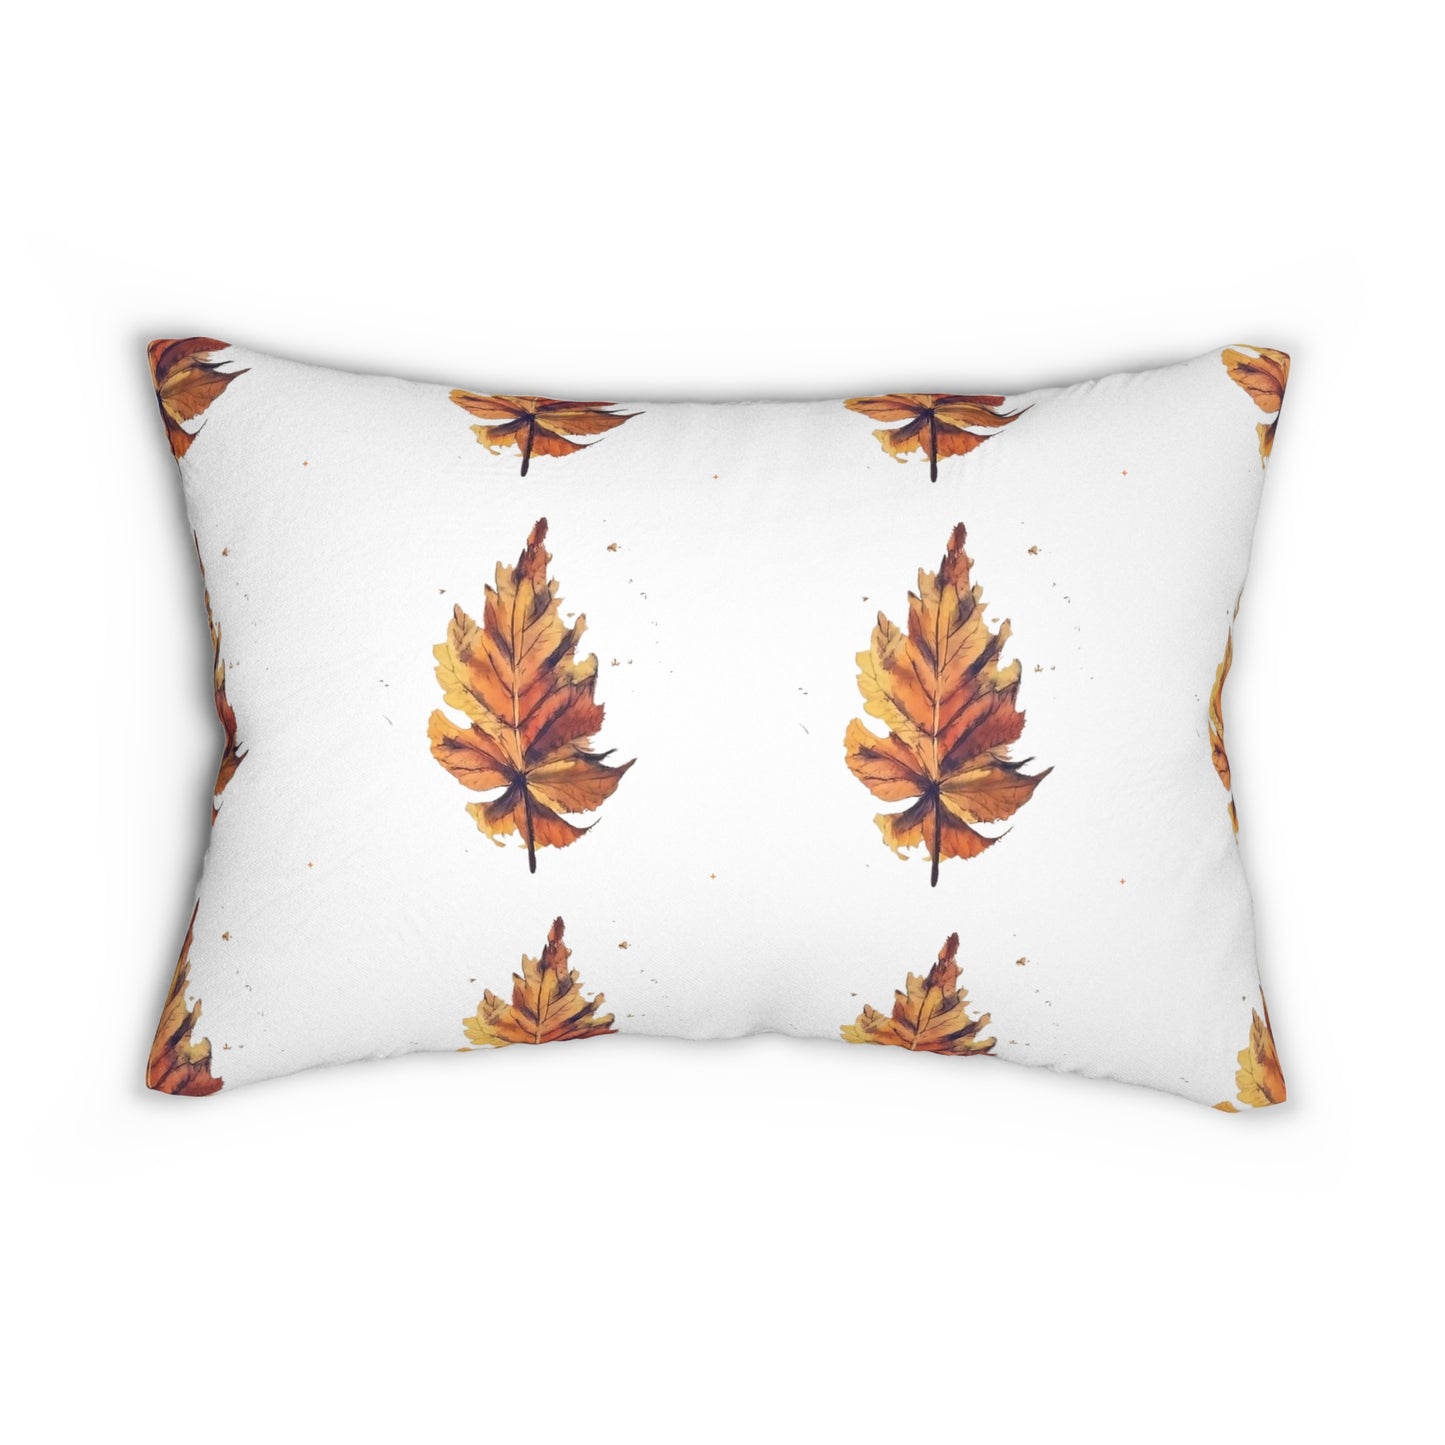 Cat and Leaves  Spun Polyester Lumbar Pillow perfect for Fall season décor